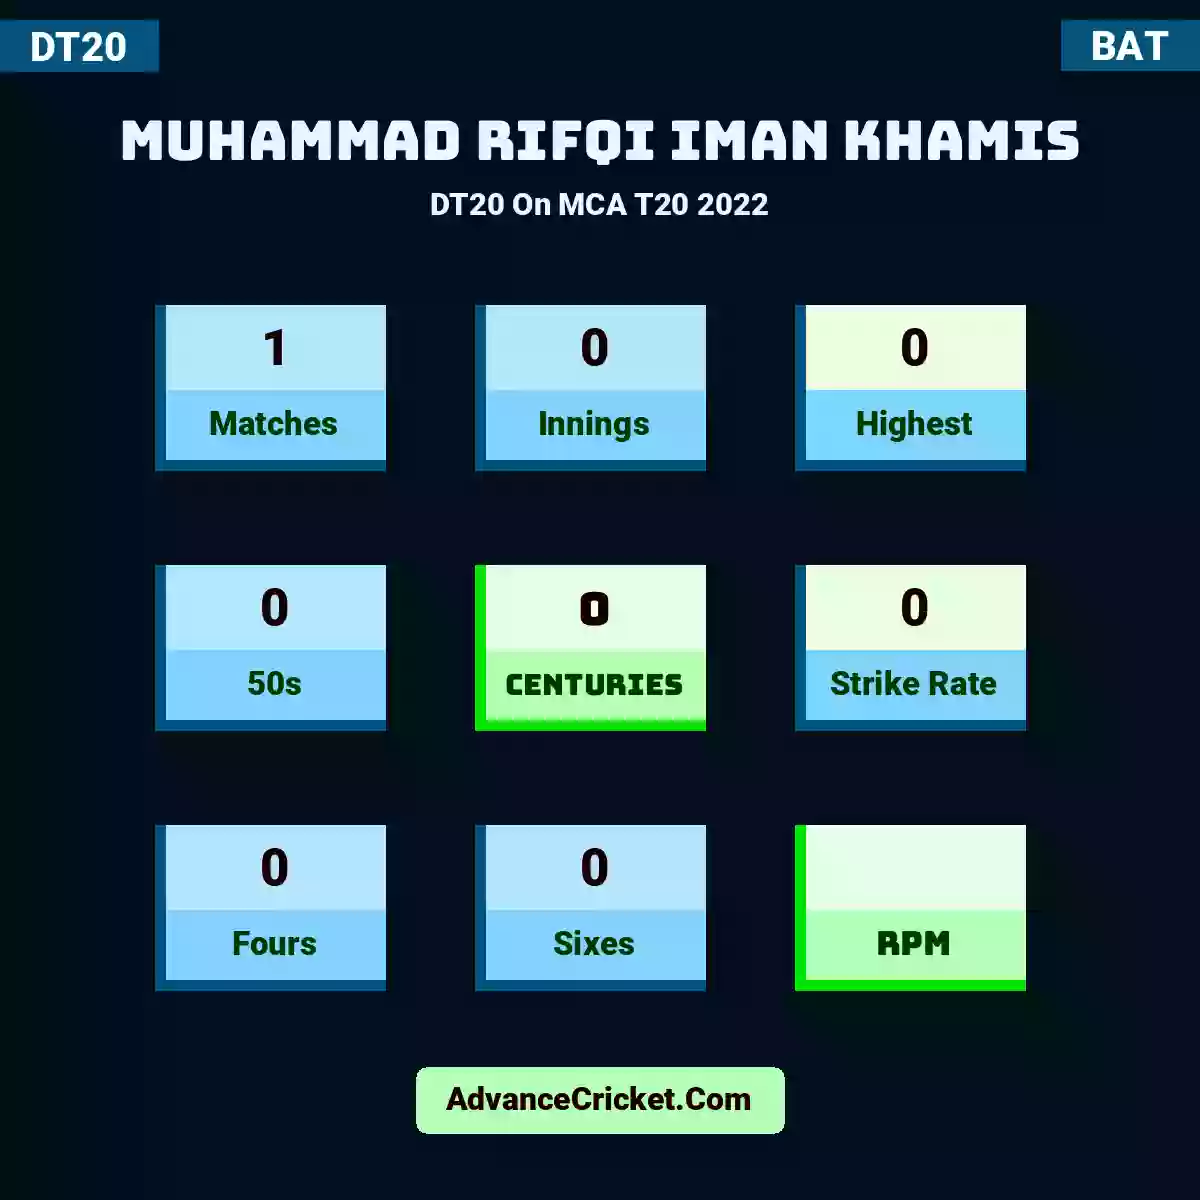 Muhammad Rifqi Iman Khamis DT20  On MCA T20 2022, Muhammad Rifqi Iman Khamis played 1 matches, scored 0 runs as highest, 0 half-centuries, and 0 centuries, with a strike rate of 0. m.rifqi.iman.khamis hit 0 fours and 0 sixes.